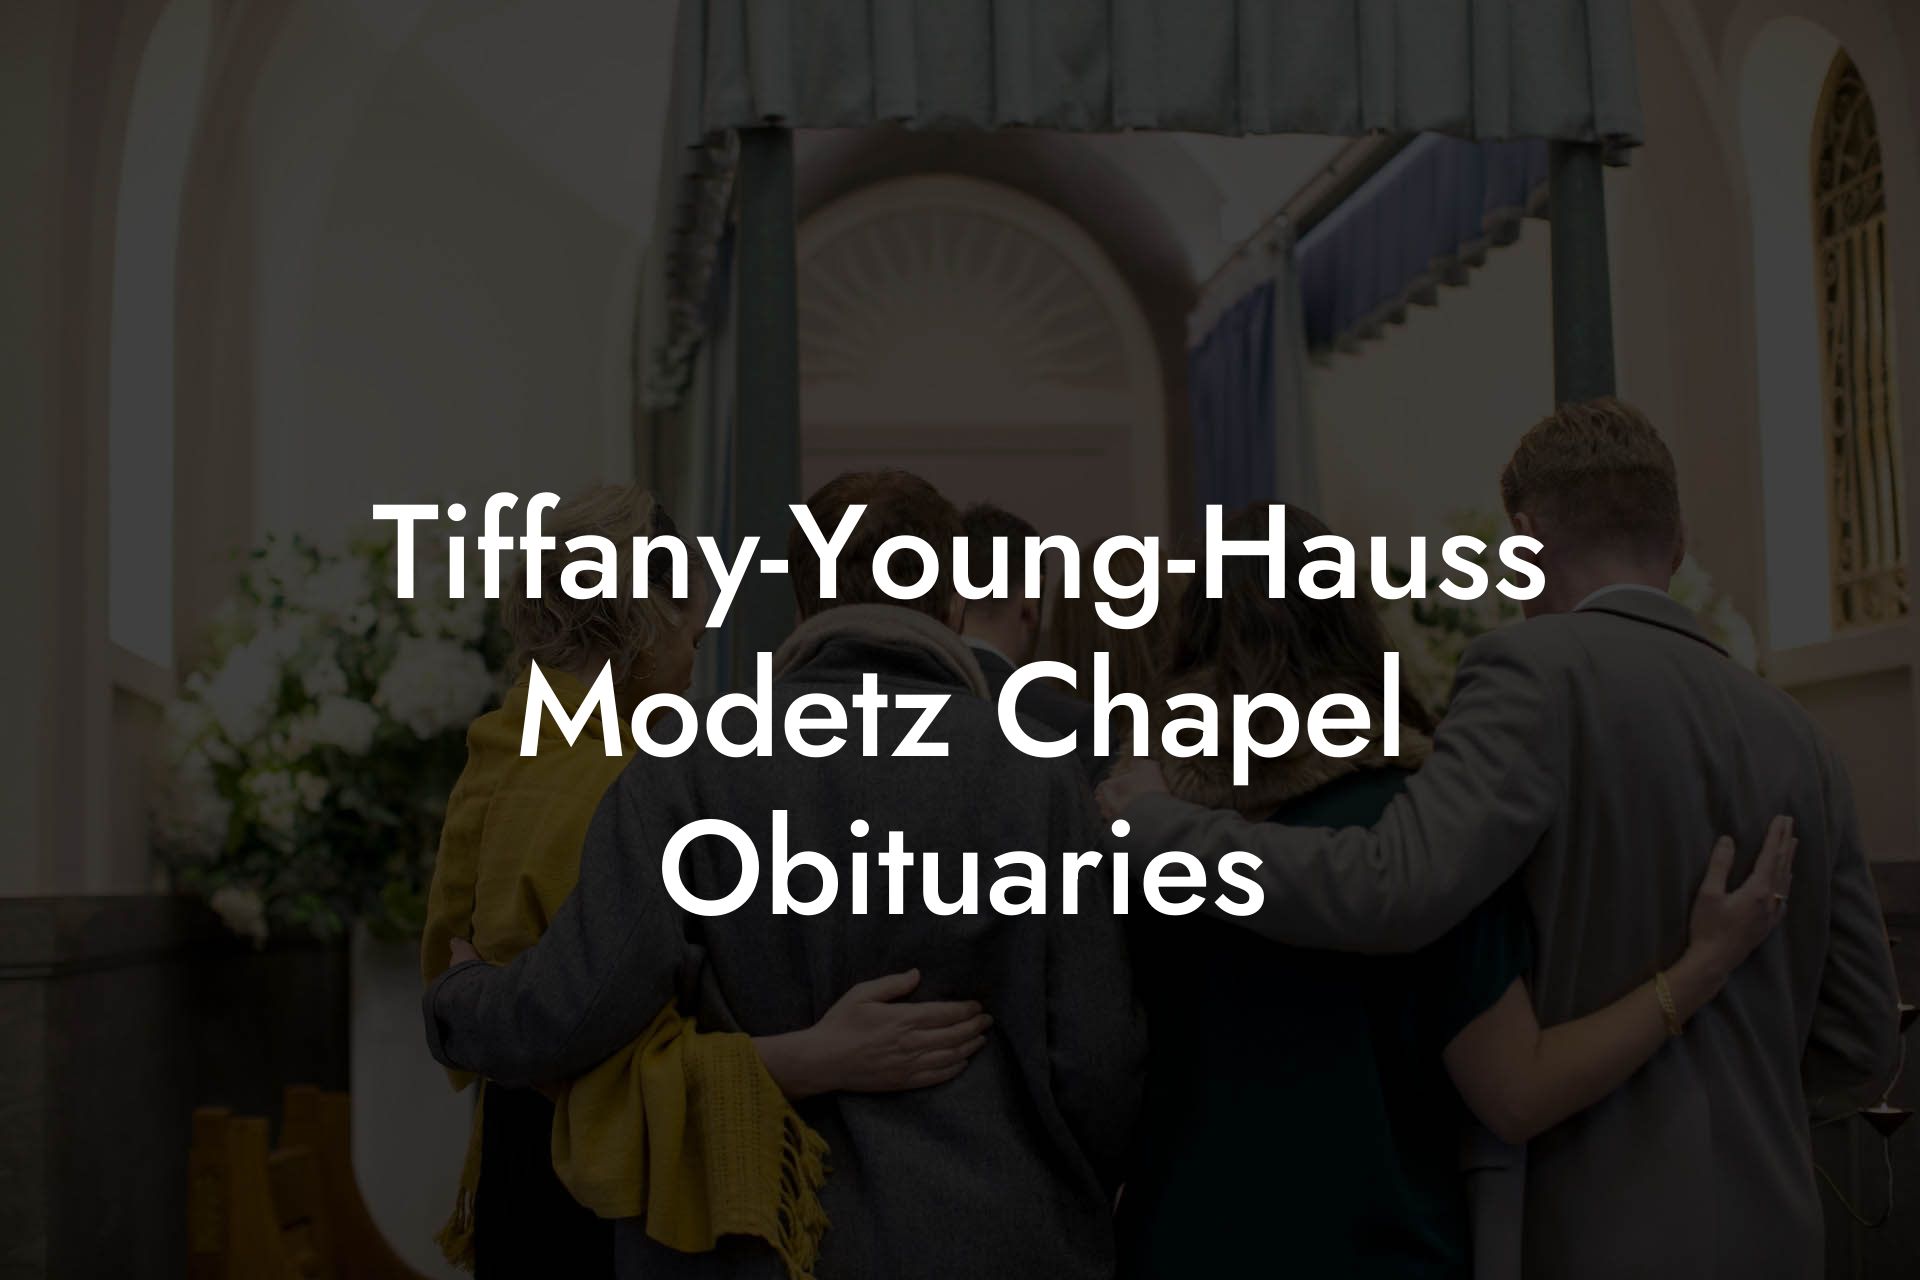 Tiffany-Young-Hauss Modetz Chapel Obituaries